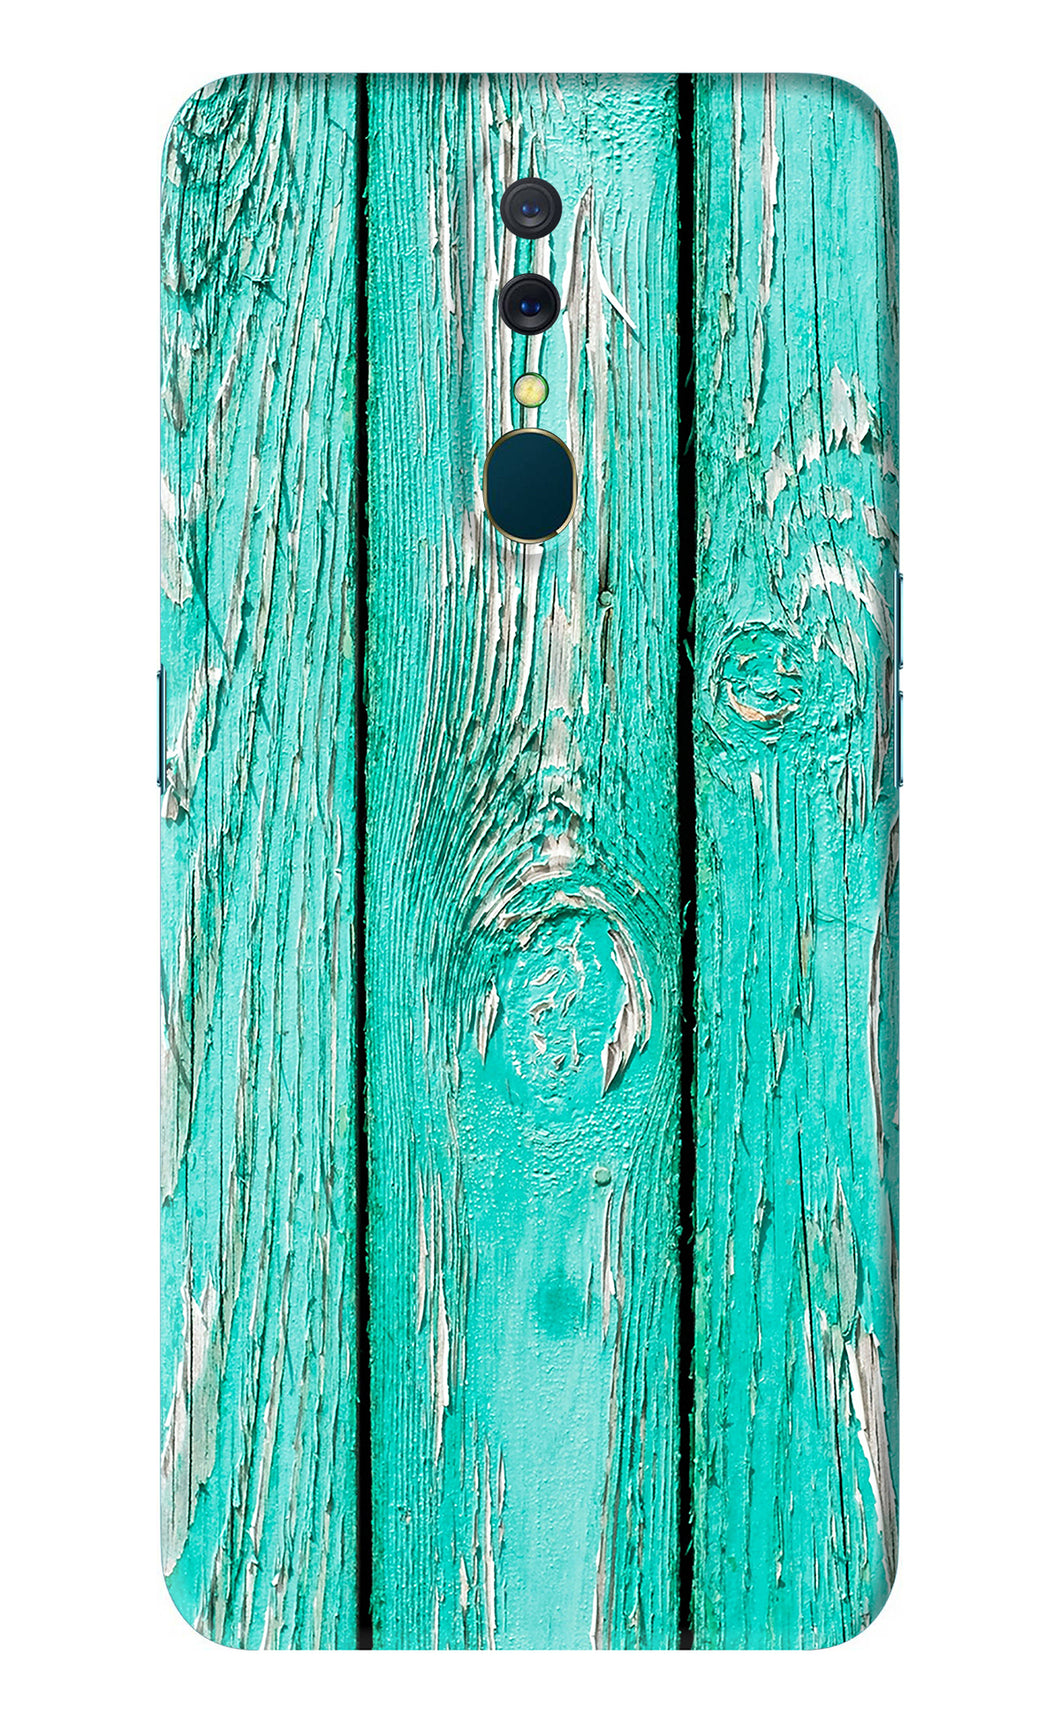 Blue Wood Oppo A9 Back Skin Wrap